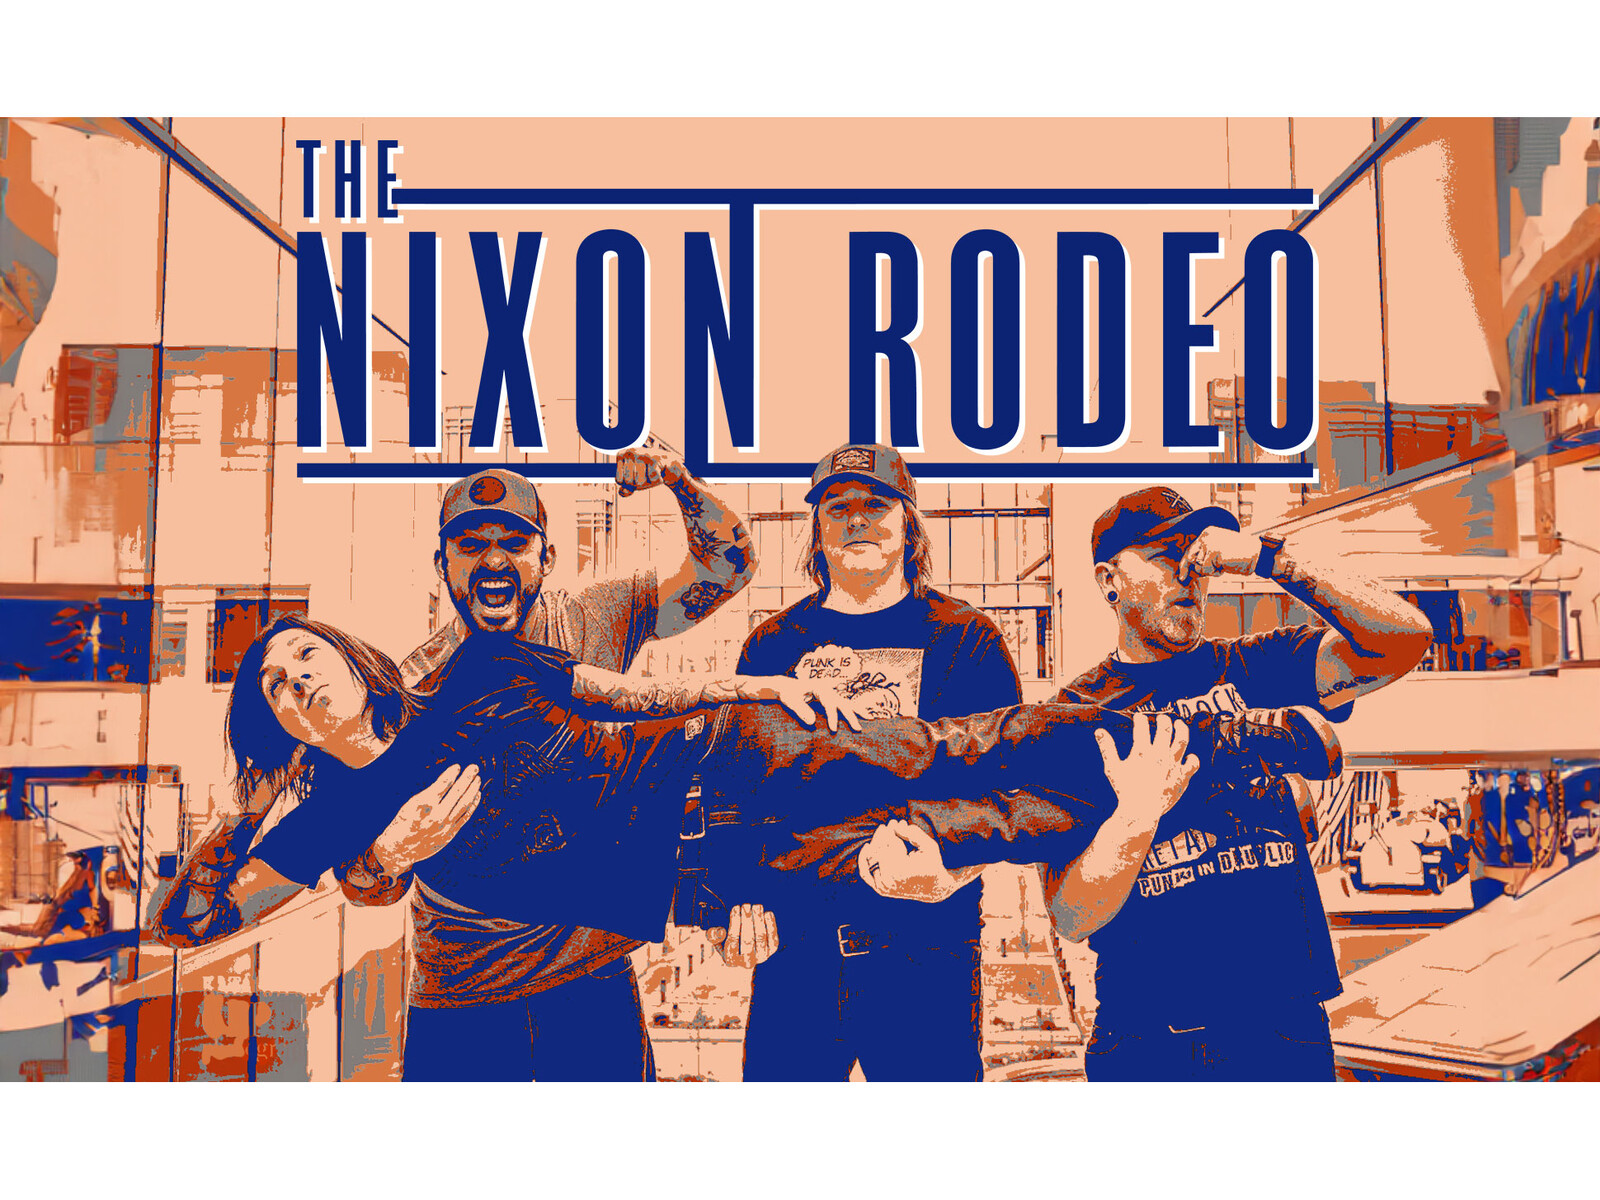 Nixon Rodeo